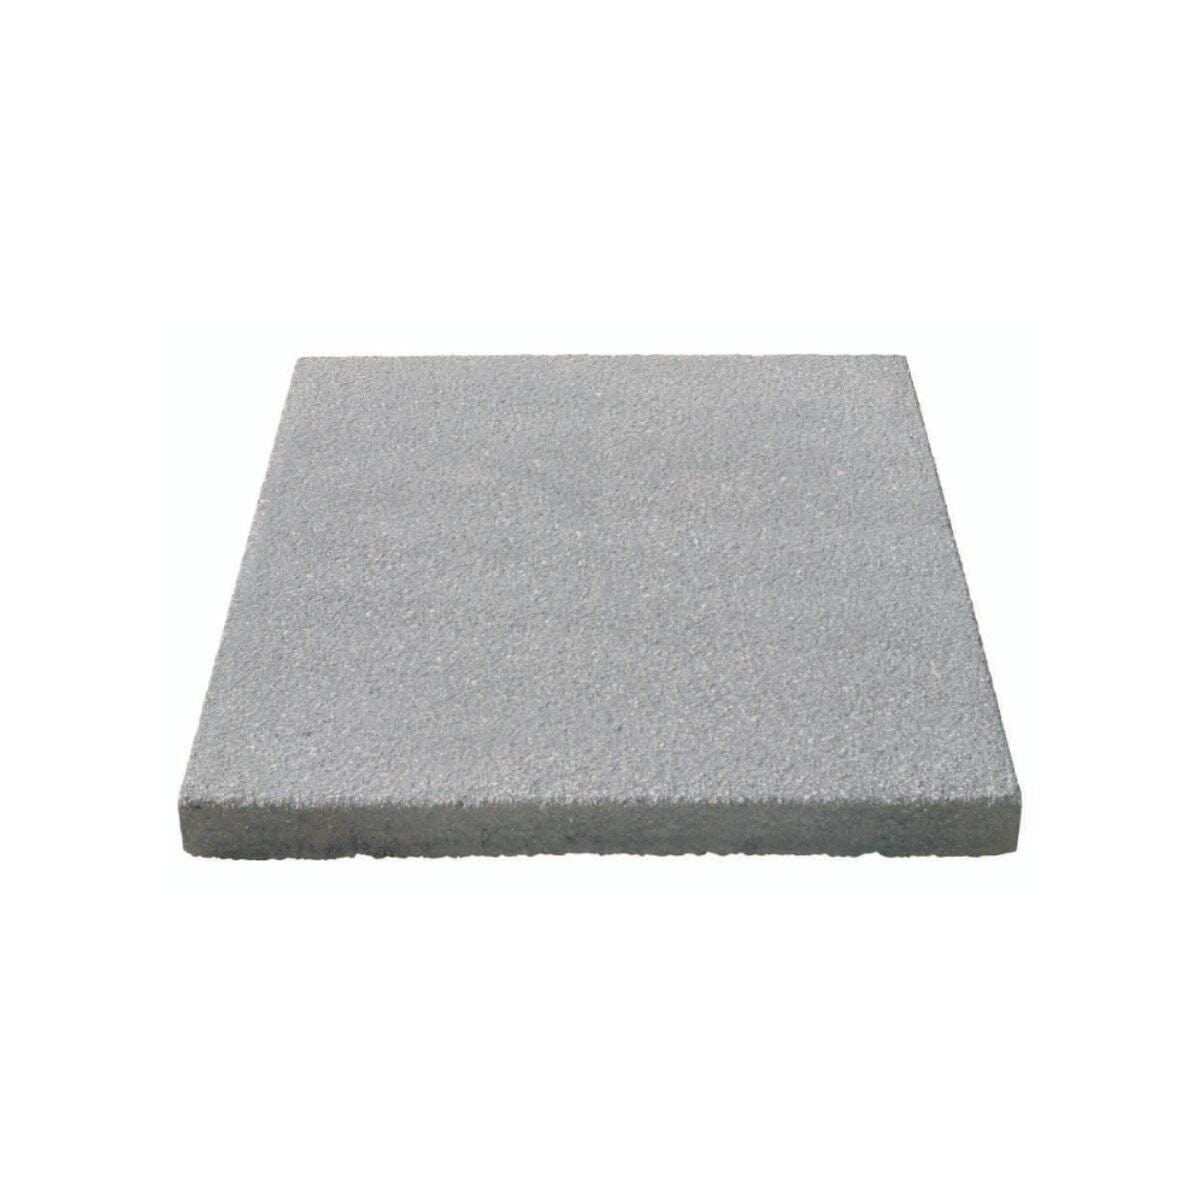 Brett Paving Concrete 'Chaucer' Natural textured paving slabs